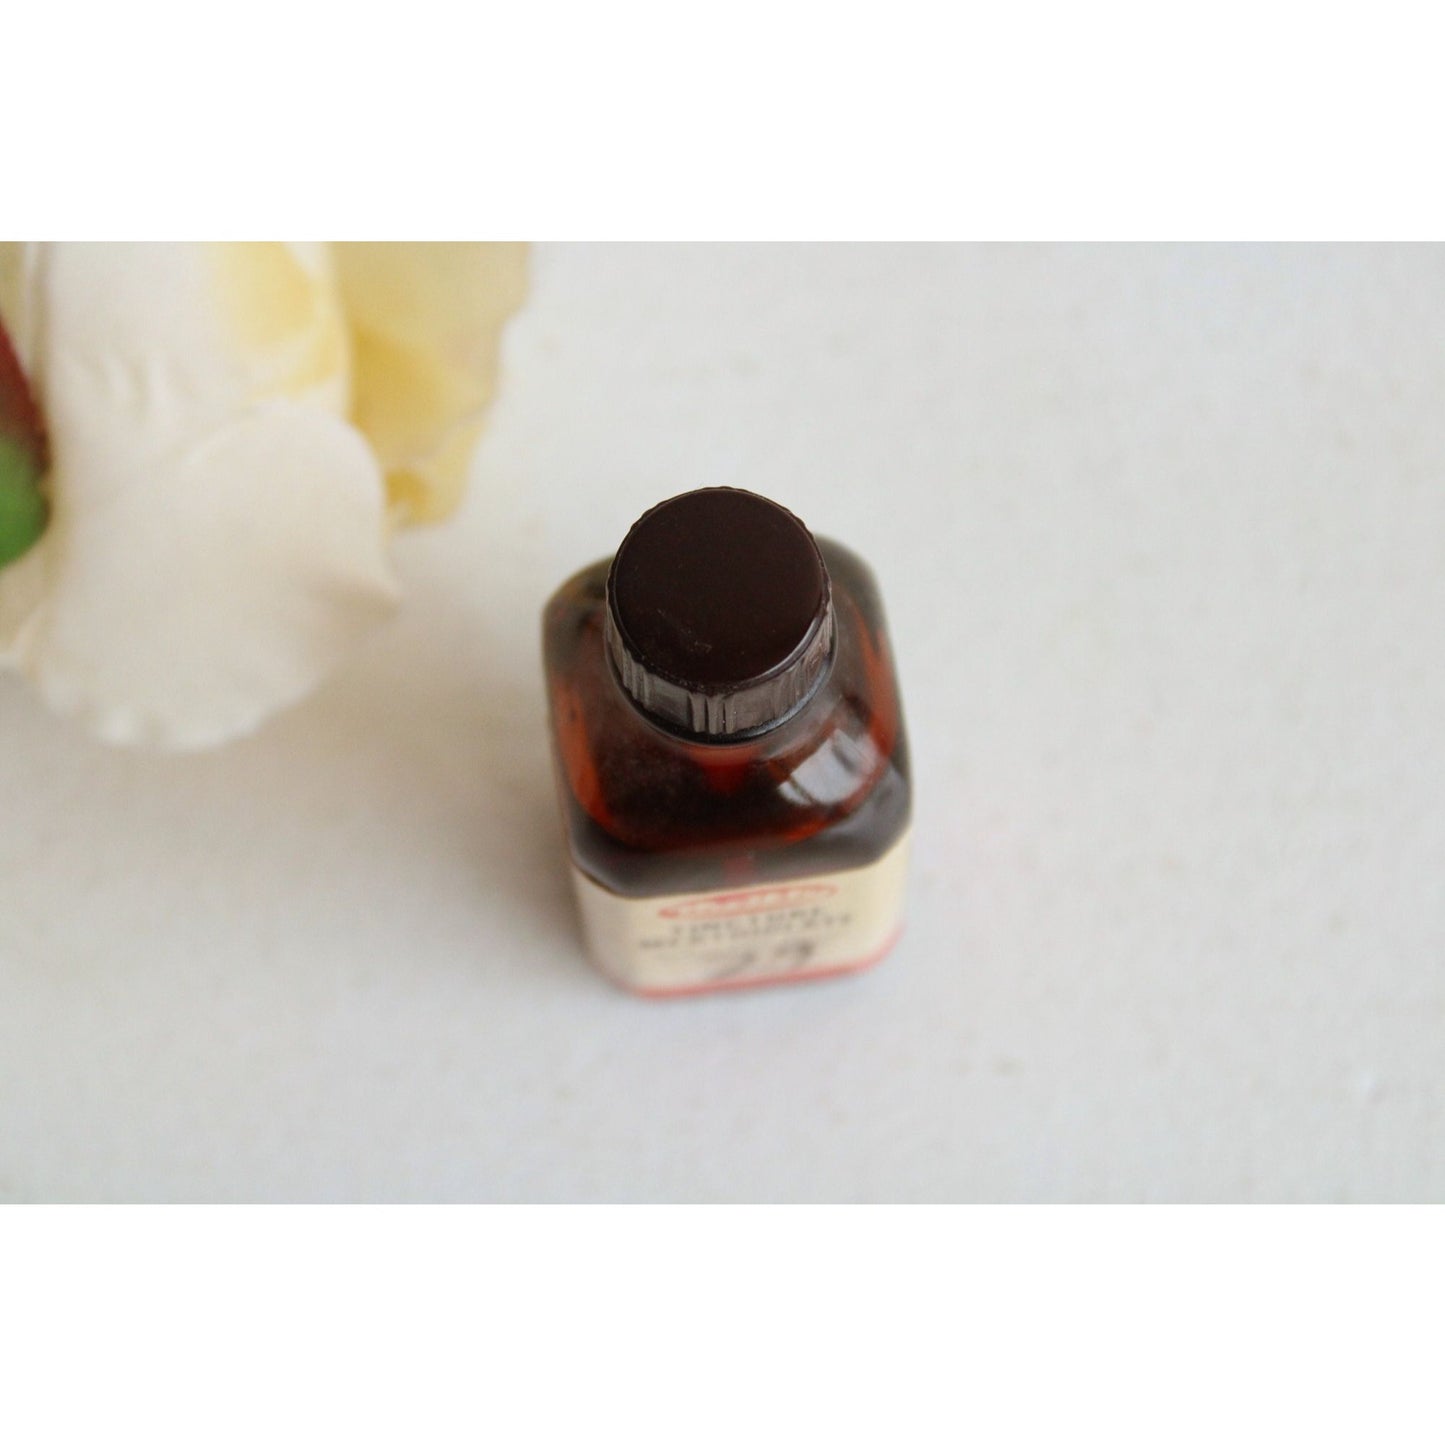 Vintage 1930s 1940s Merthiolate Tincture Apothecary Glass Poison Bottle